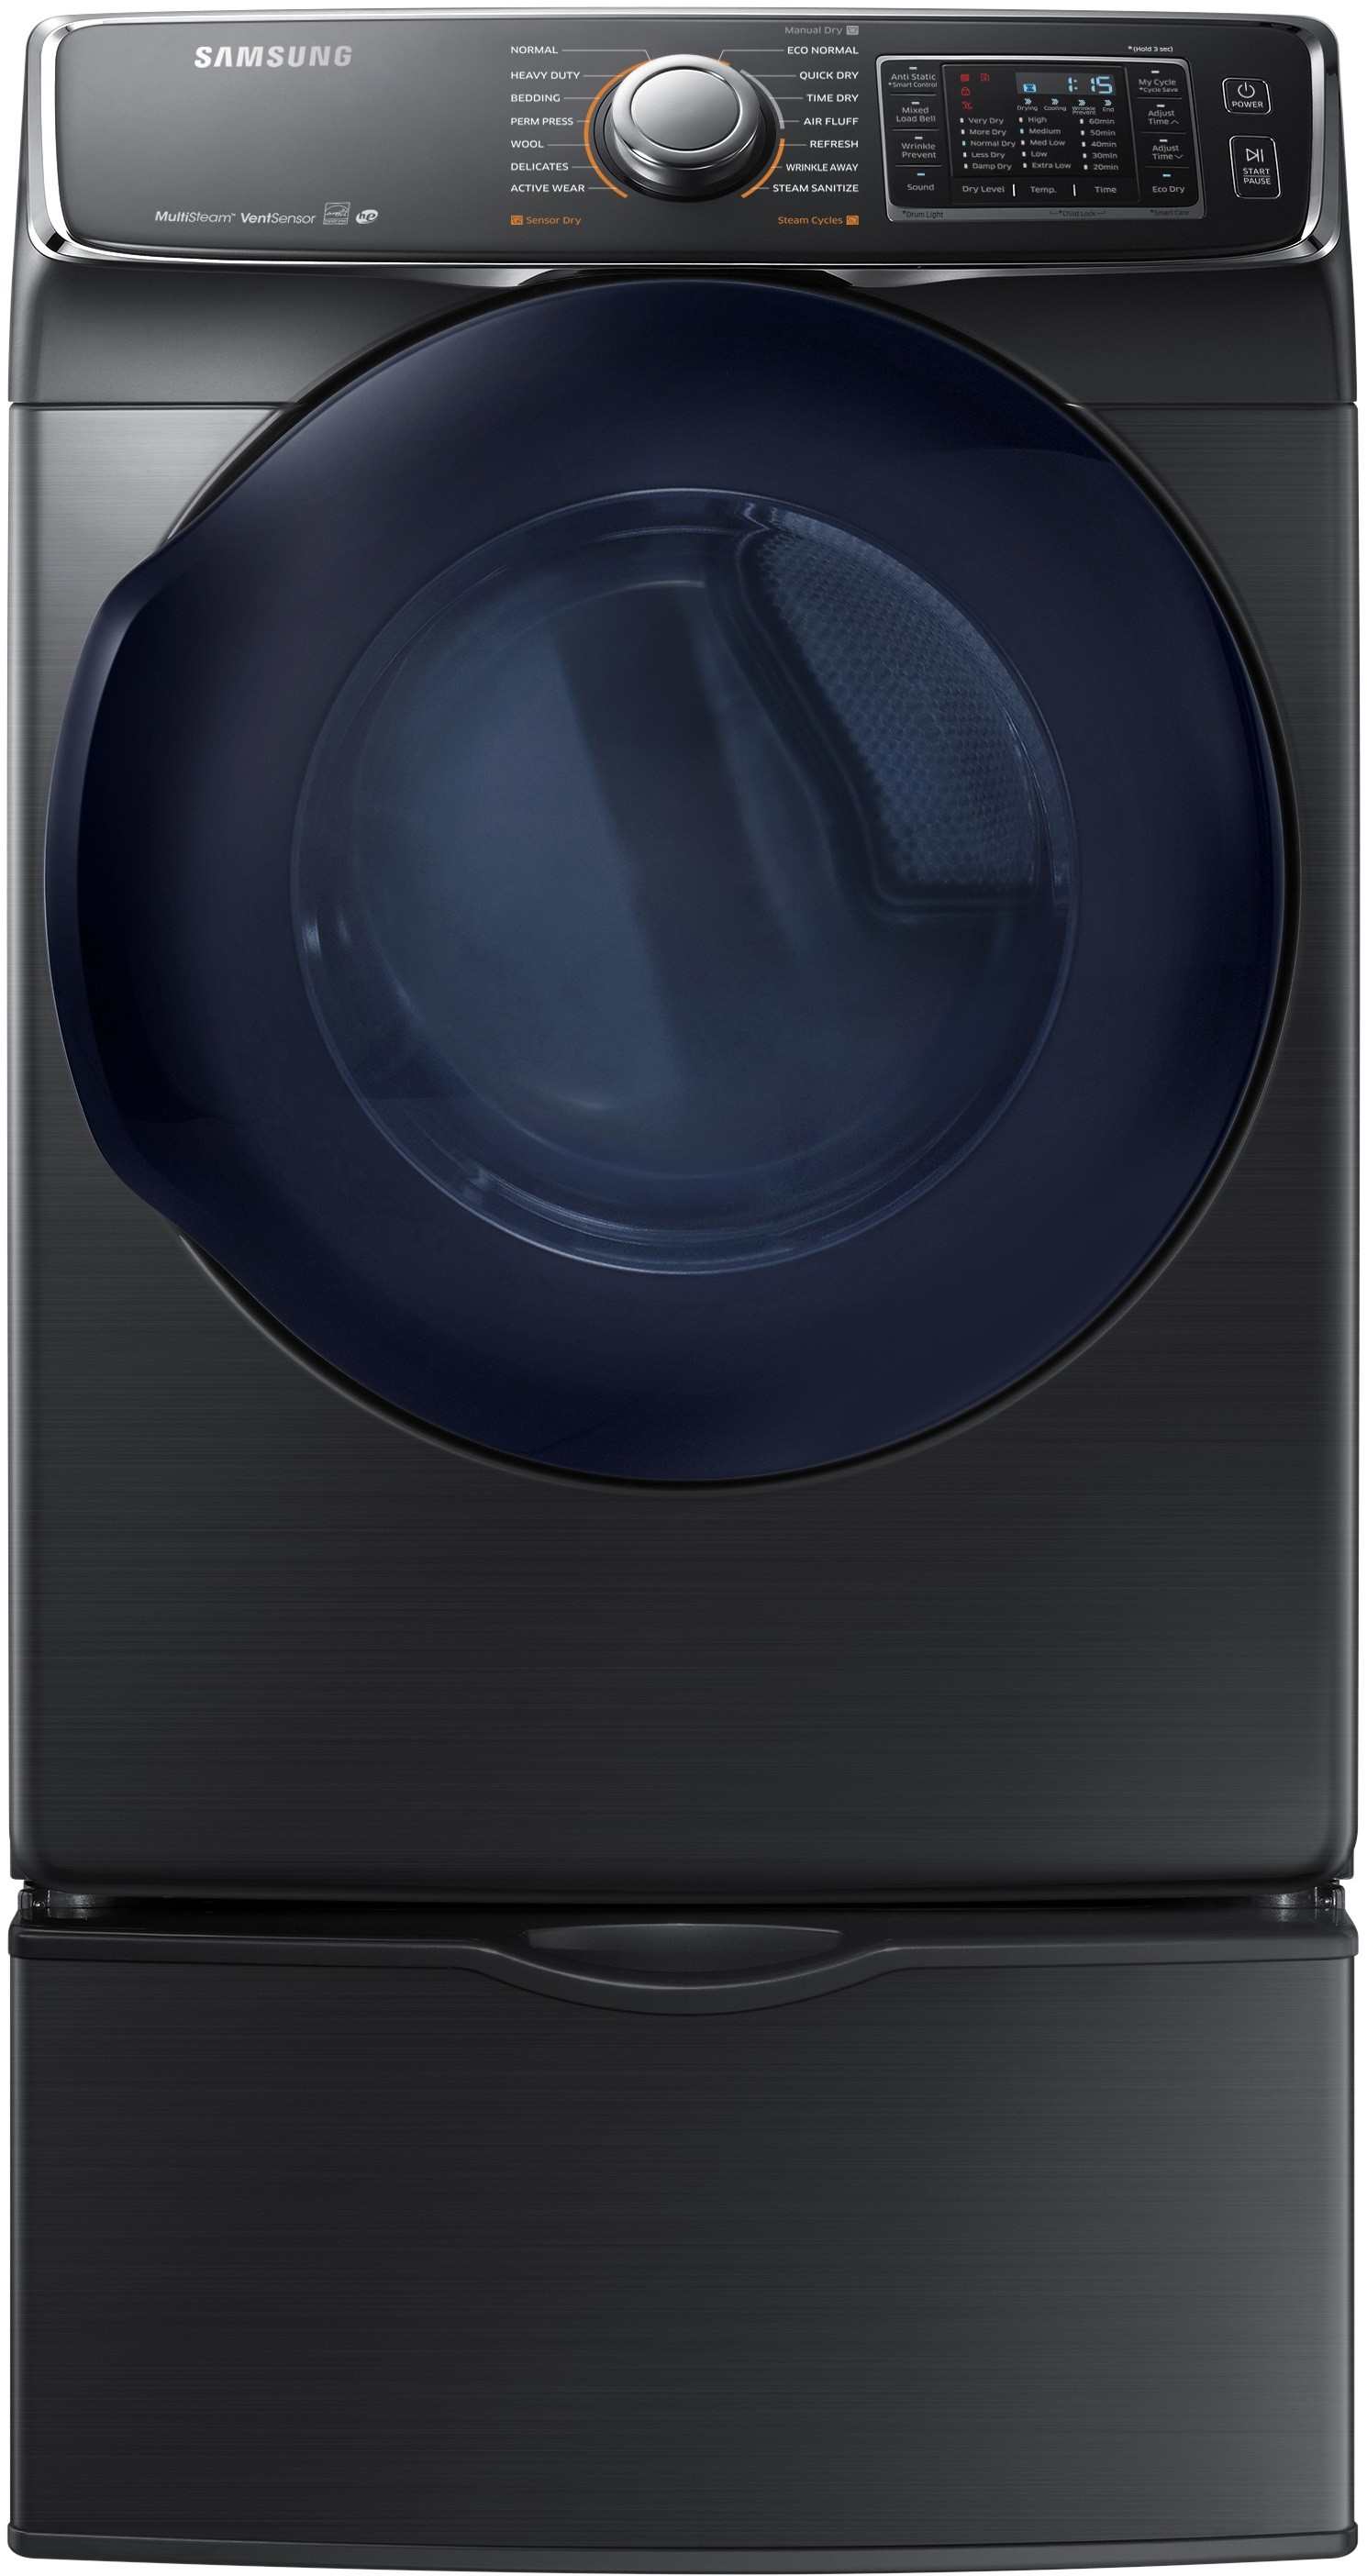 Samsung DV45K6500EV 27 Inch 7.5 cu. ft. Electric Dryer with Multi-Steam